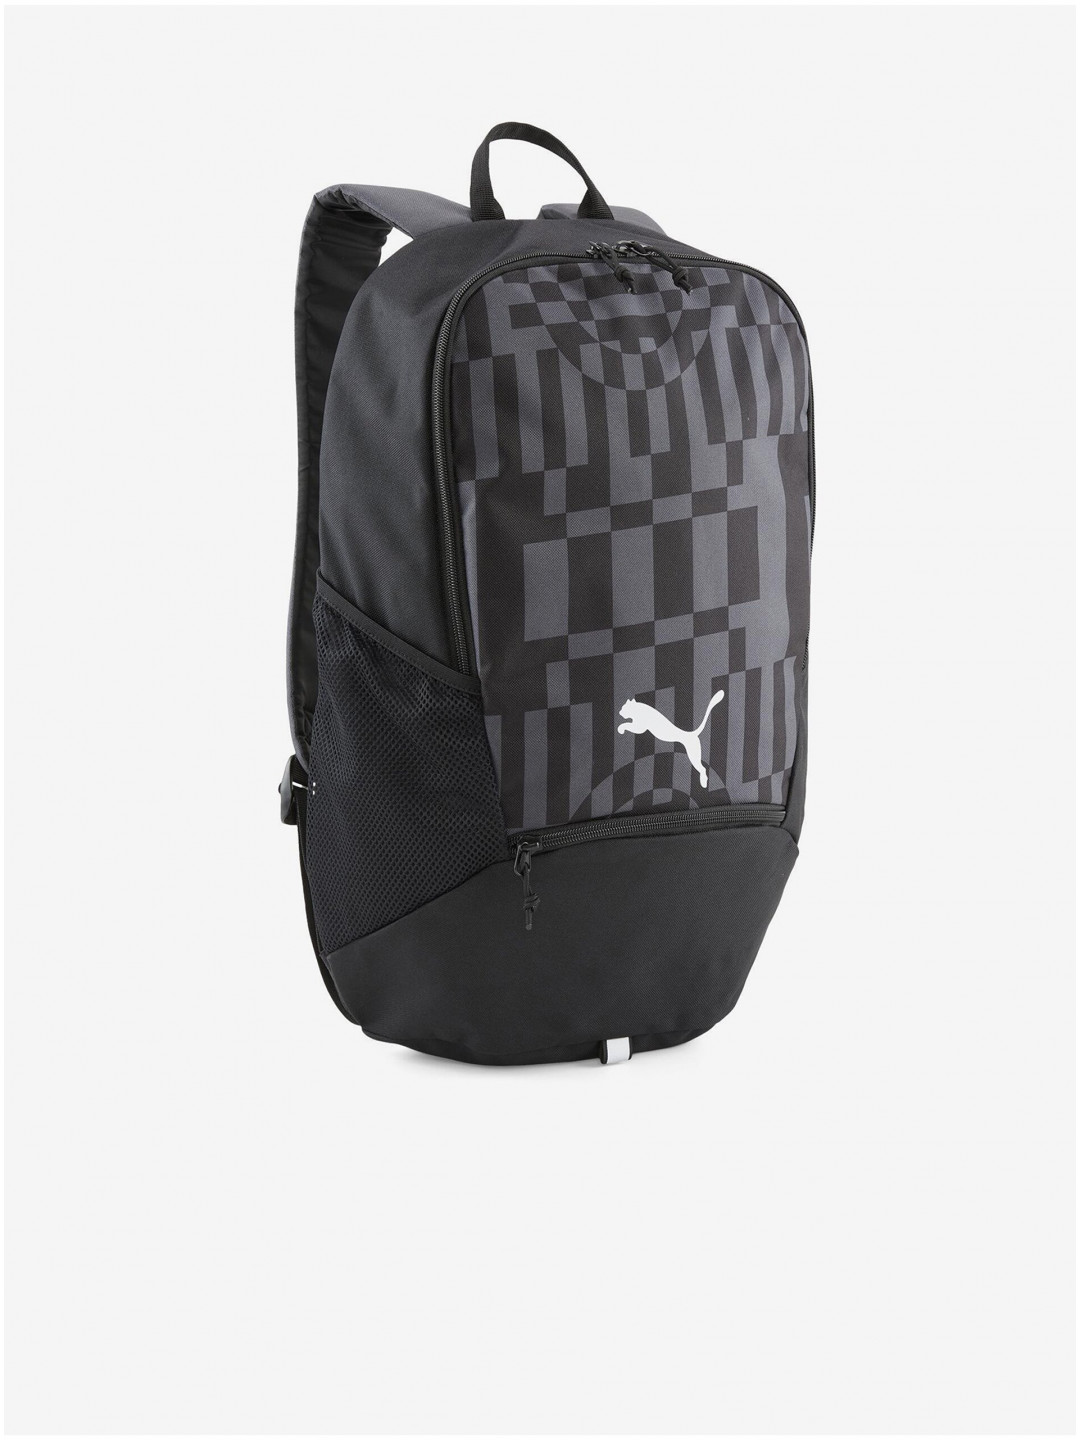 Šedo-černý batoh Puma individualRISE Backpack